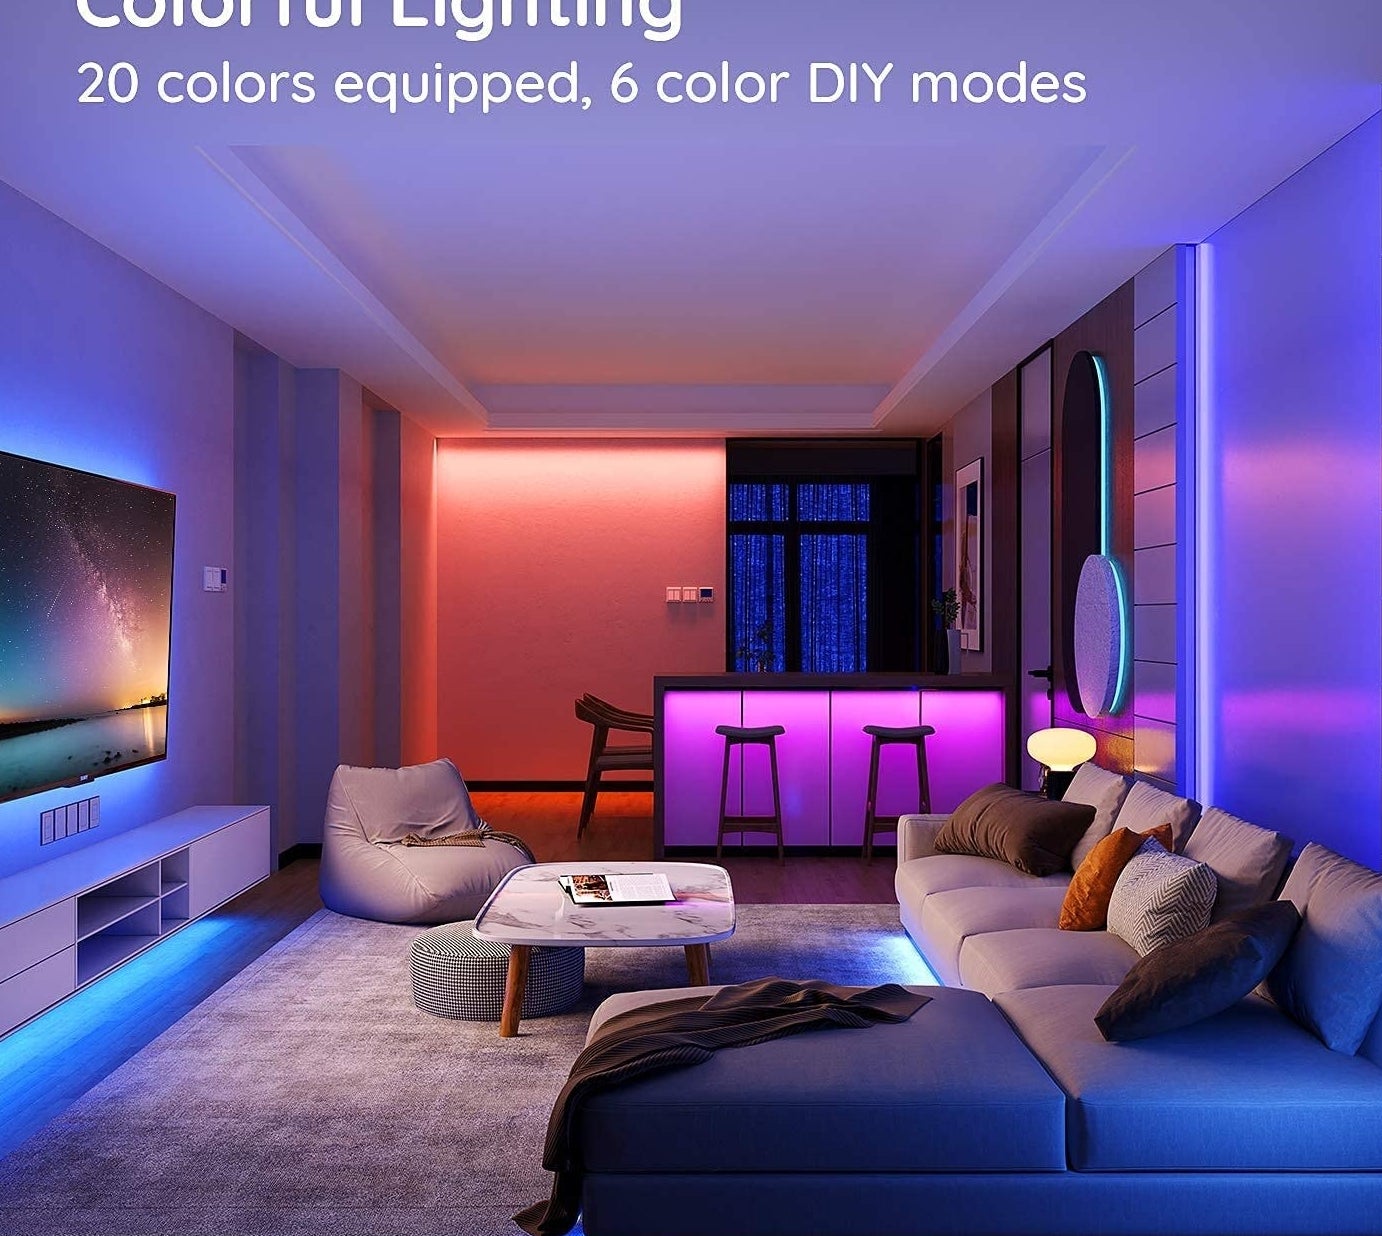 LED lights lighting up a living room